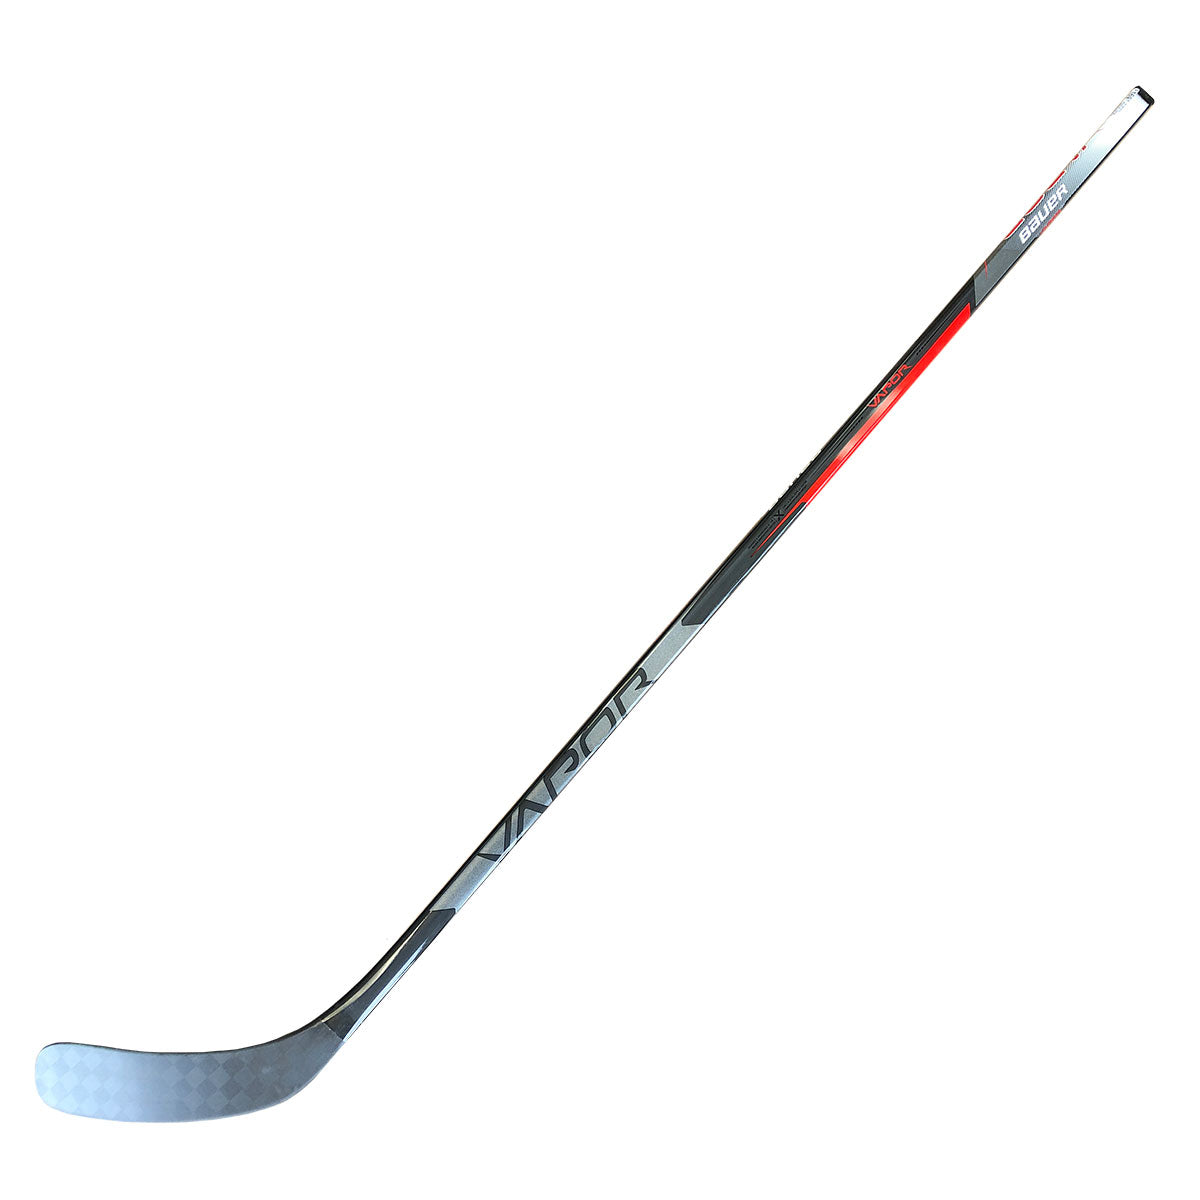 Bauer S21 Vapor League Ice Hockey Stick (Senior) full view